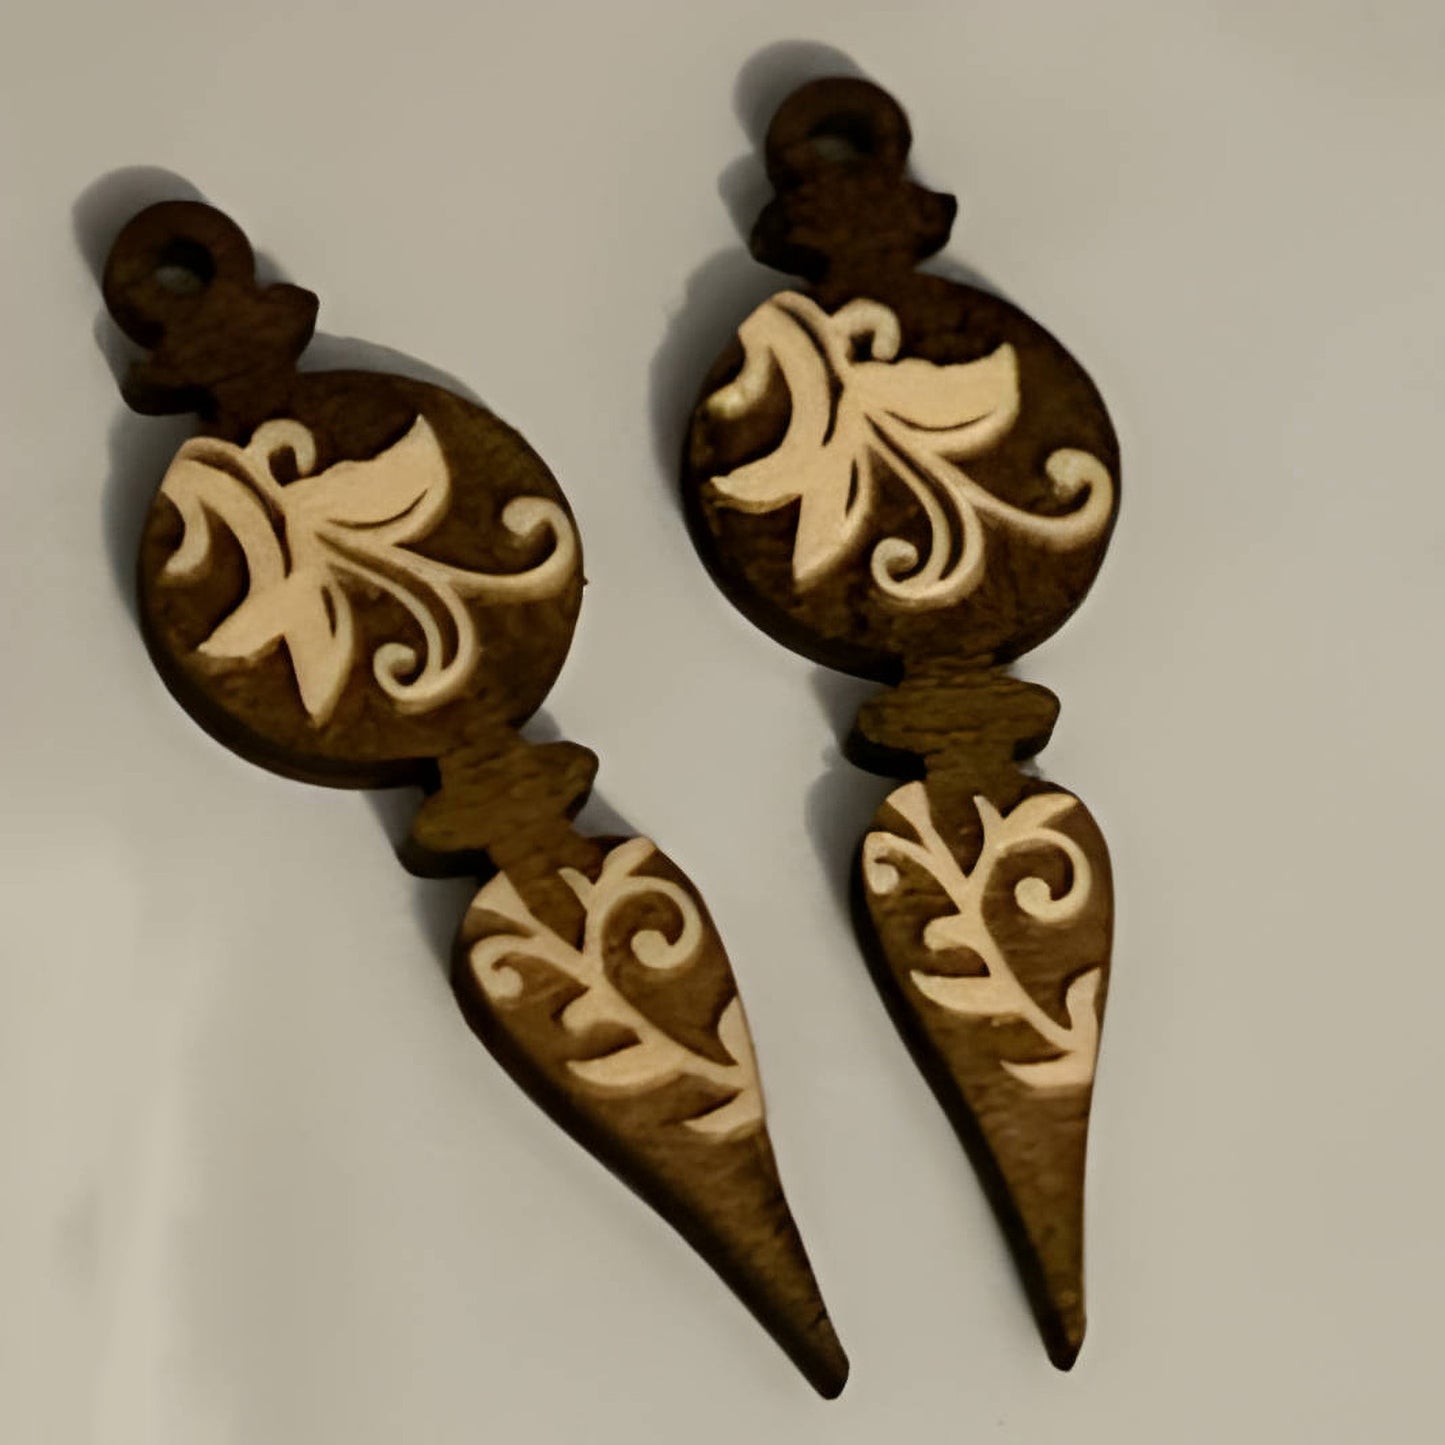 Reverse Engrave Flourish Ornament Earrings